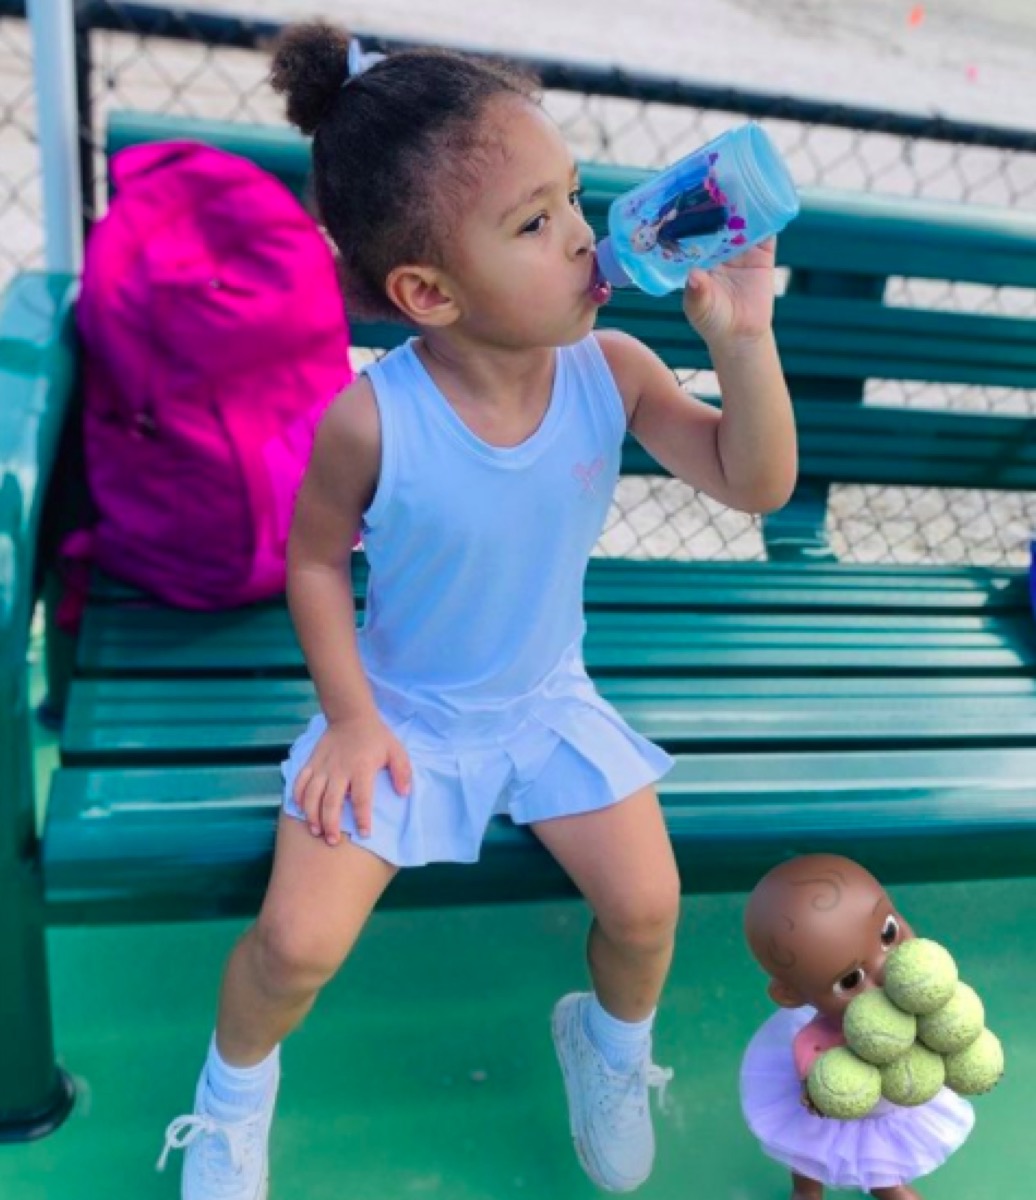 Serena Williams' daughter Alexis